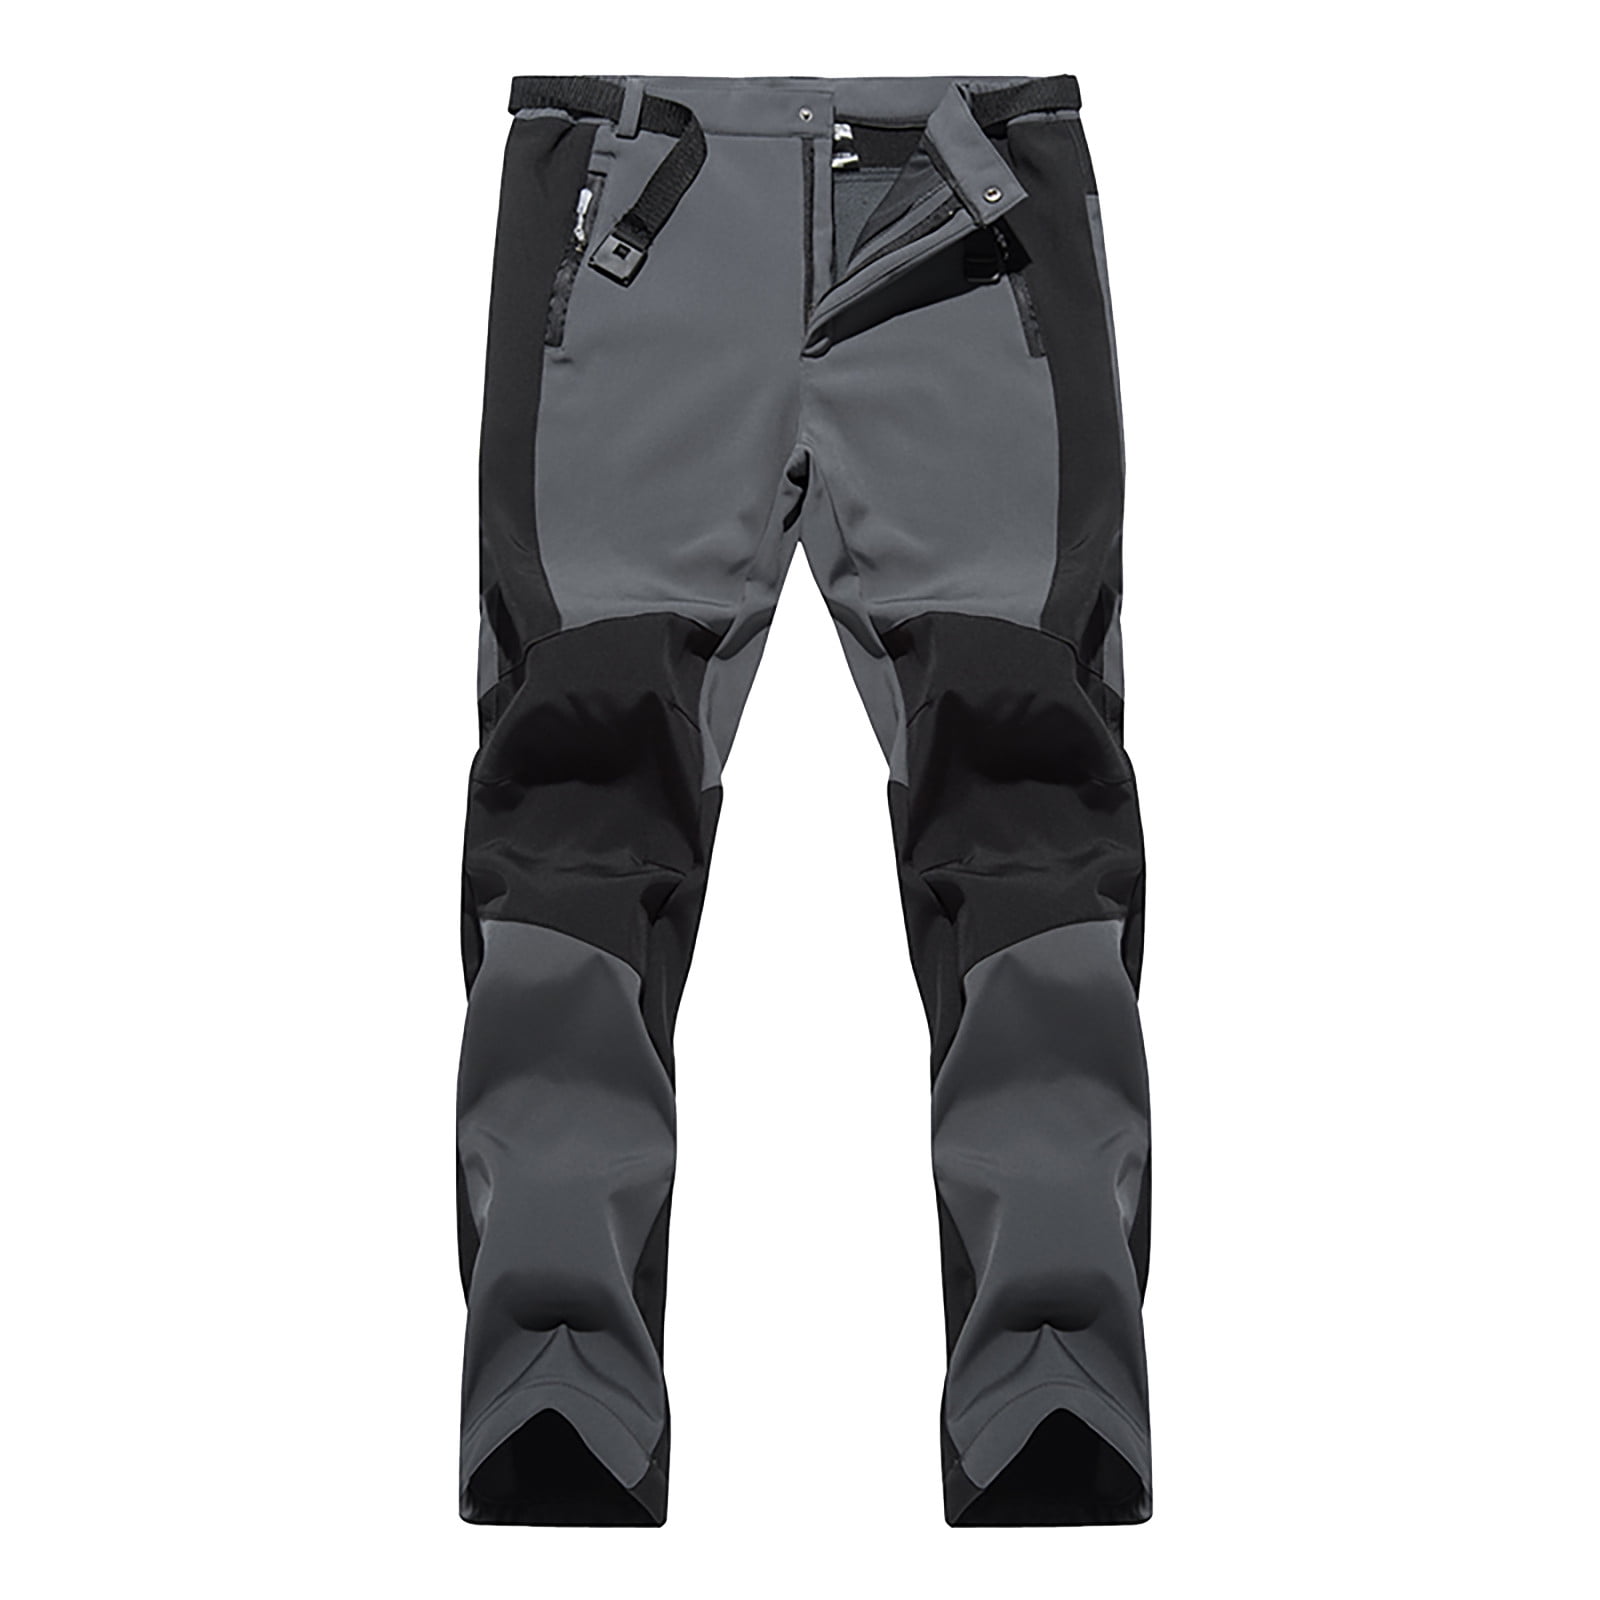 Winter Ski & Board Pants-Youth Pulse Cargo Pant, Black